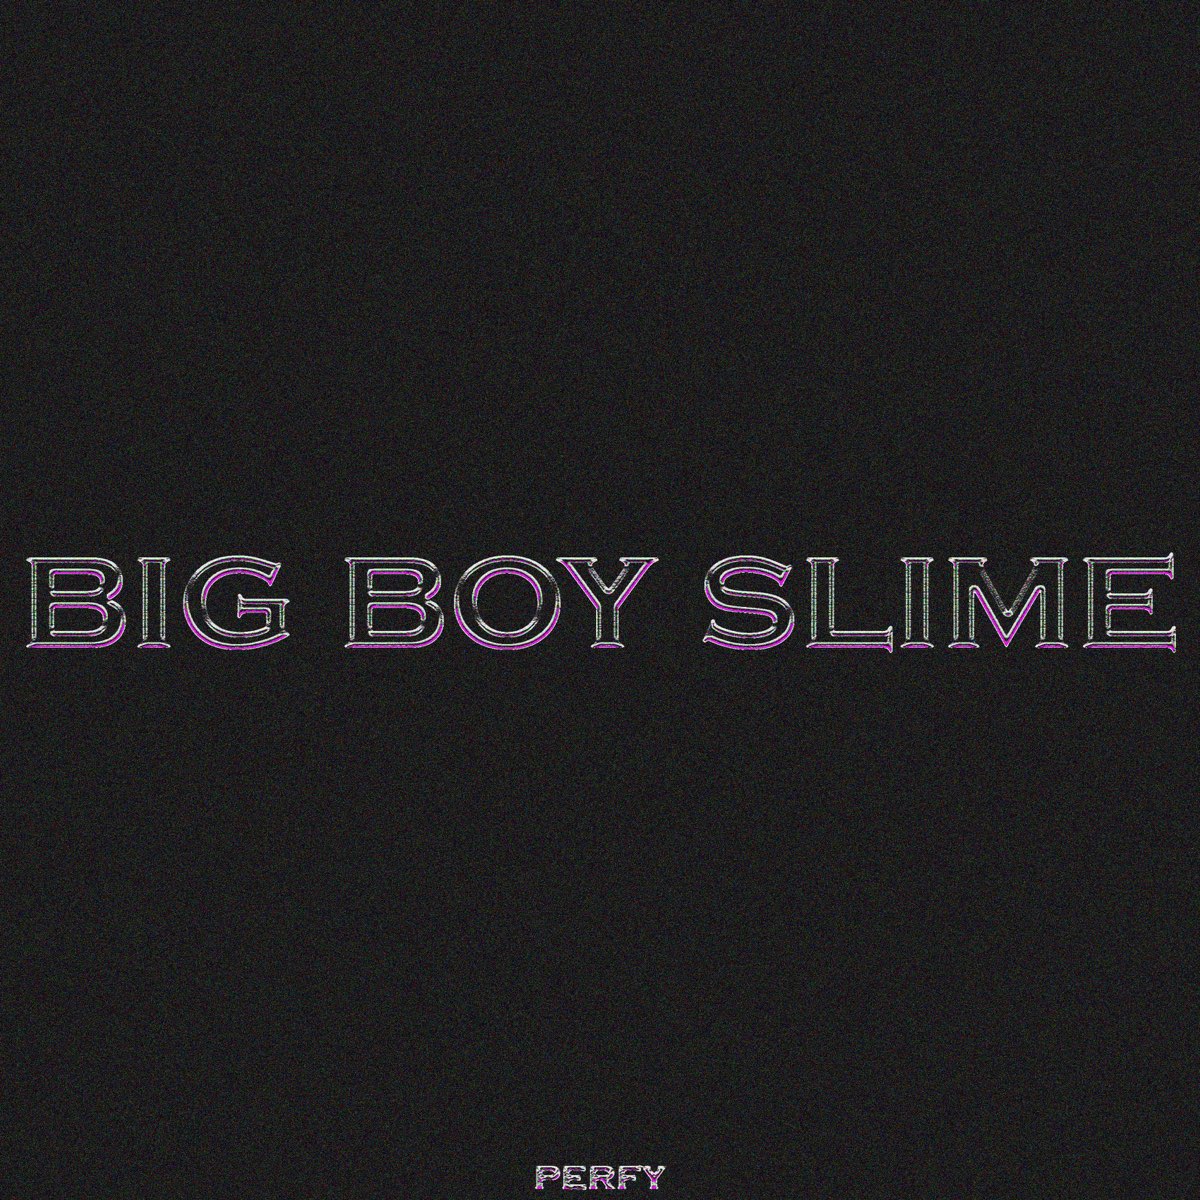 Текст песни слайм. Slime boy репер. Песня Биг бойс. Слова песни big boy Slime. Slime boy mimef послушать песню.